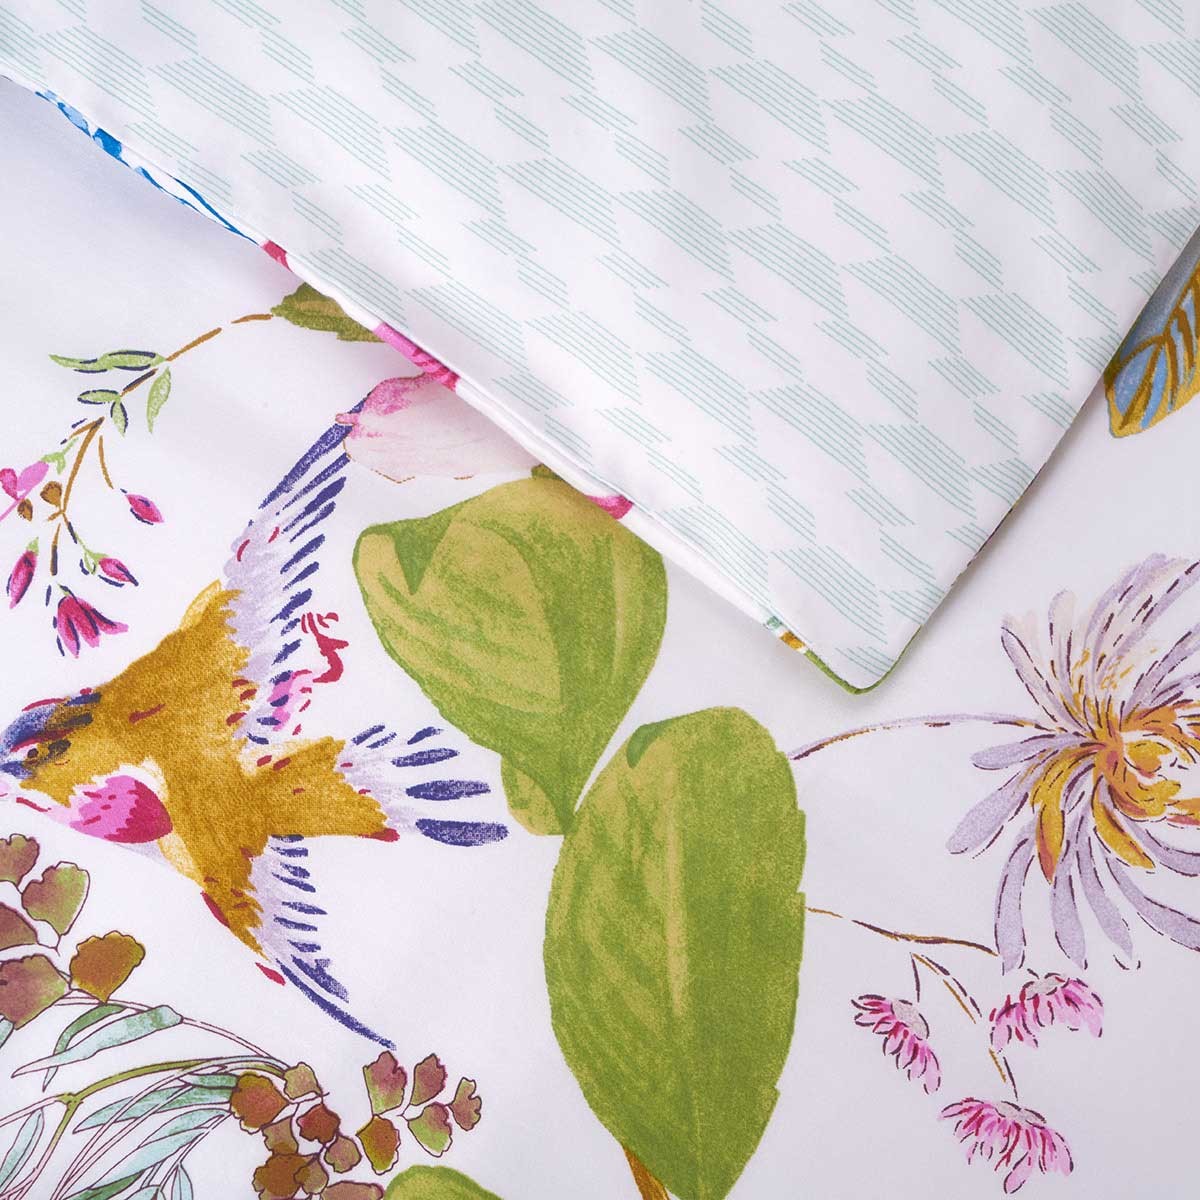 Bed Linen Flores Multicoloured